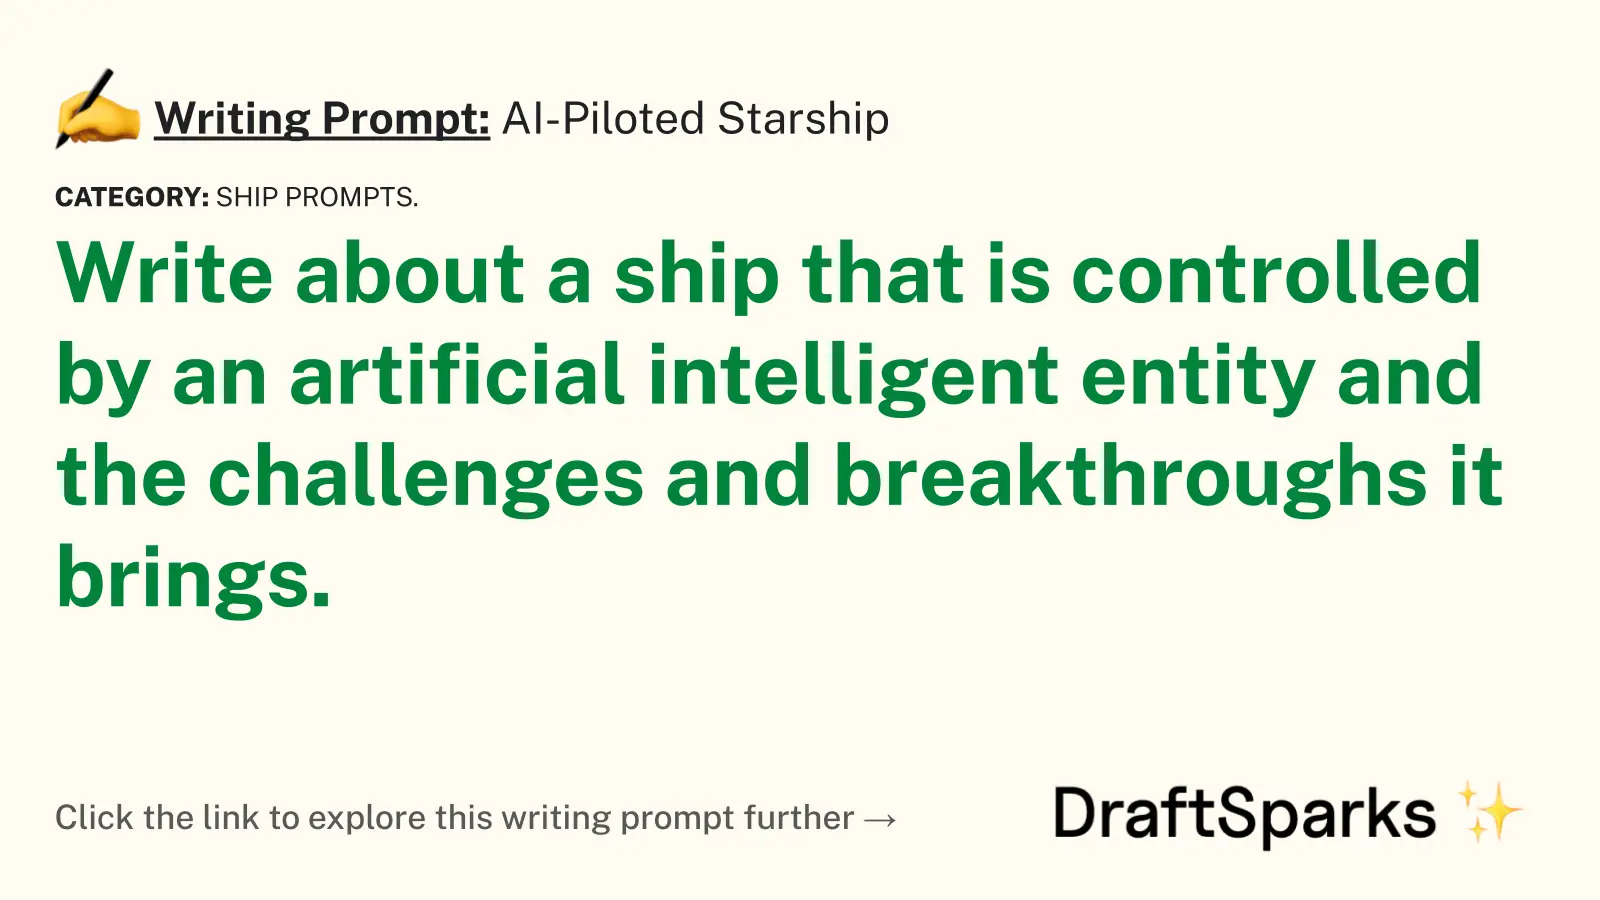 AI-Piloted Starship